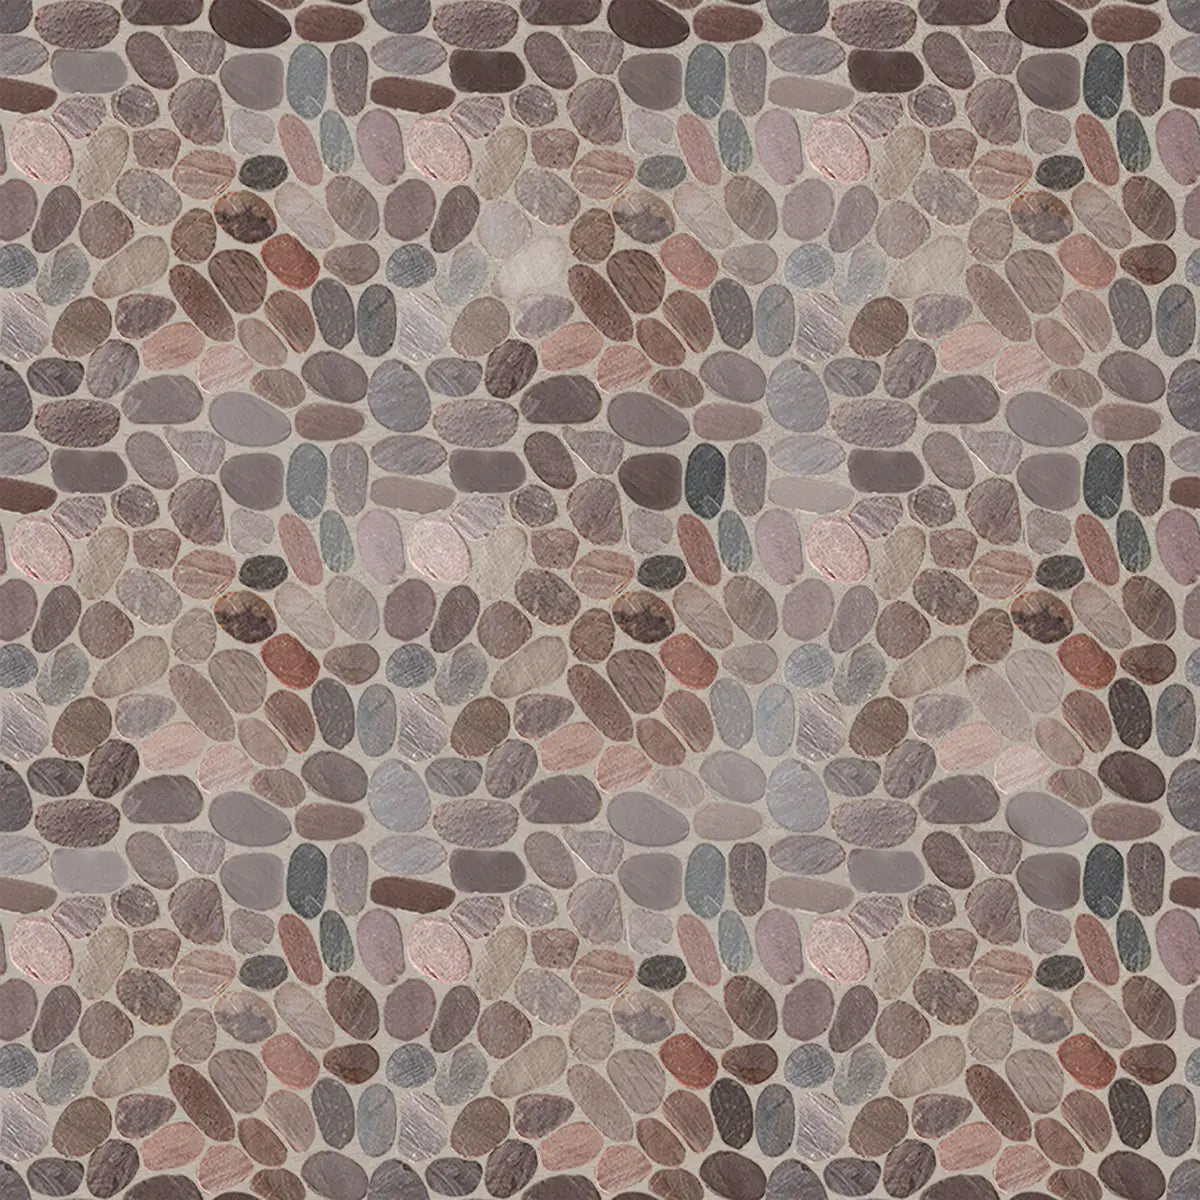 Pebble Stone Tiles, Choco Sliced Pebble Mosaic Wall & Floor Tile